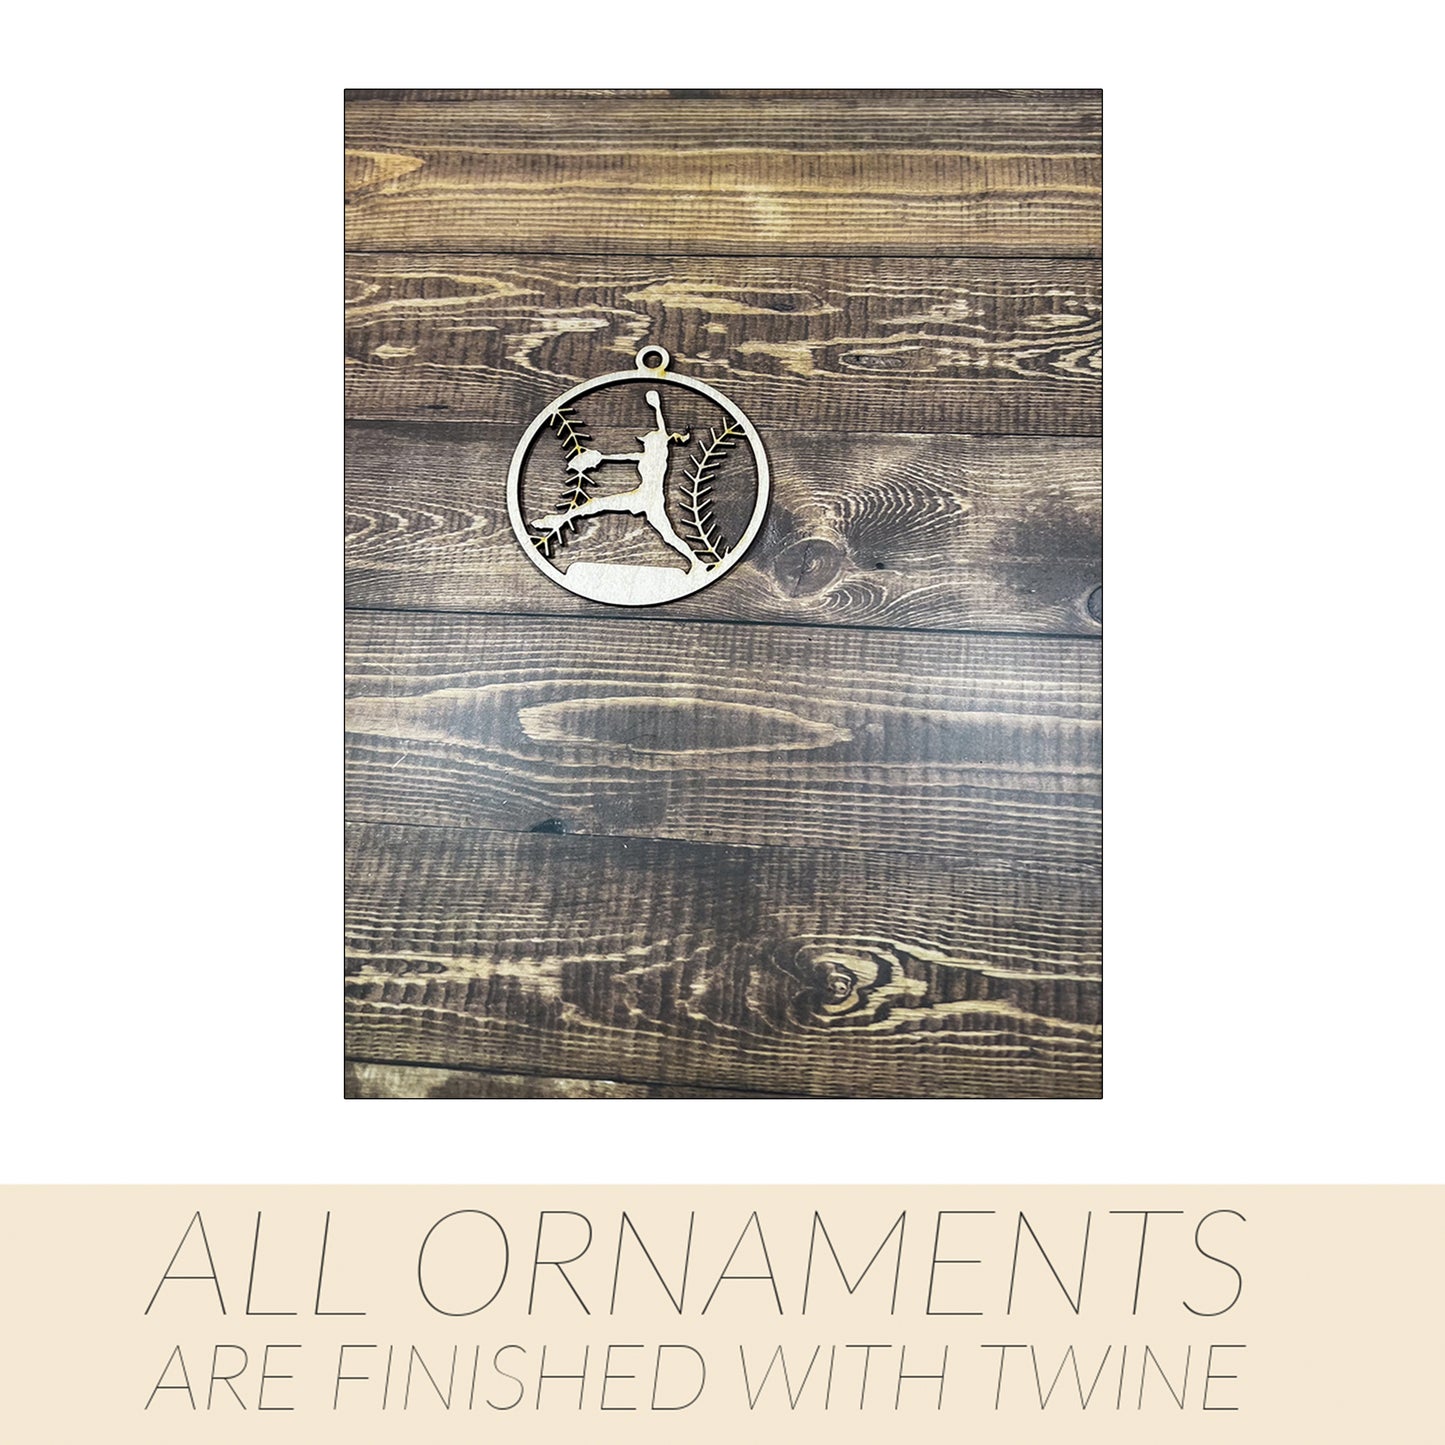 Softball Ornament, Wooden Sports Ornament, Sports Ornament, Engraved Ornament, Laser Engraved Wood Ornament